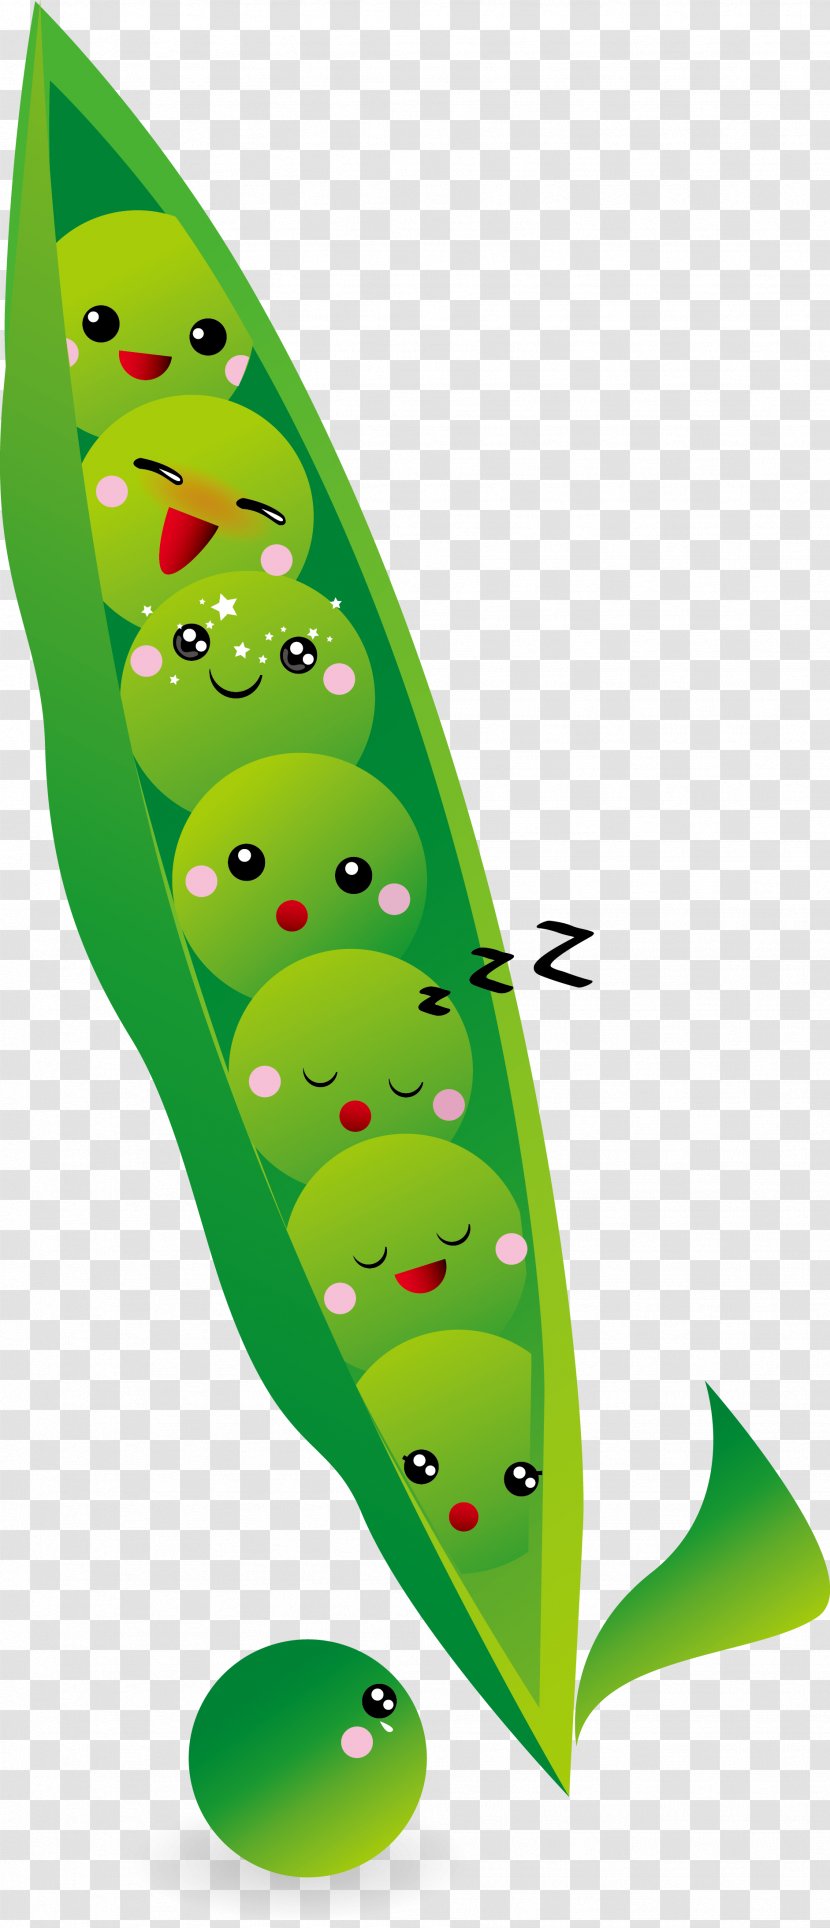 Snow Pea Leaf Cartoon - Peas Vector Transparent PNG